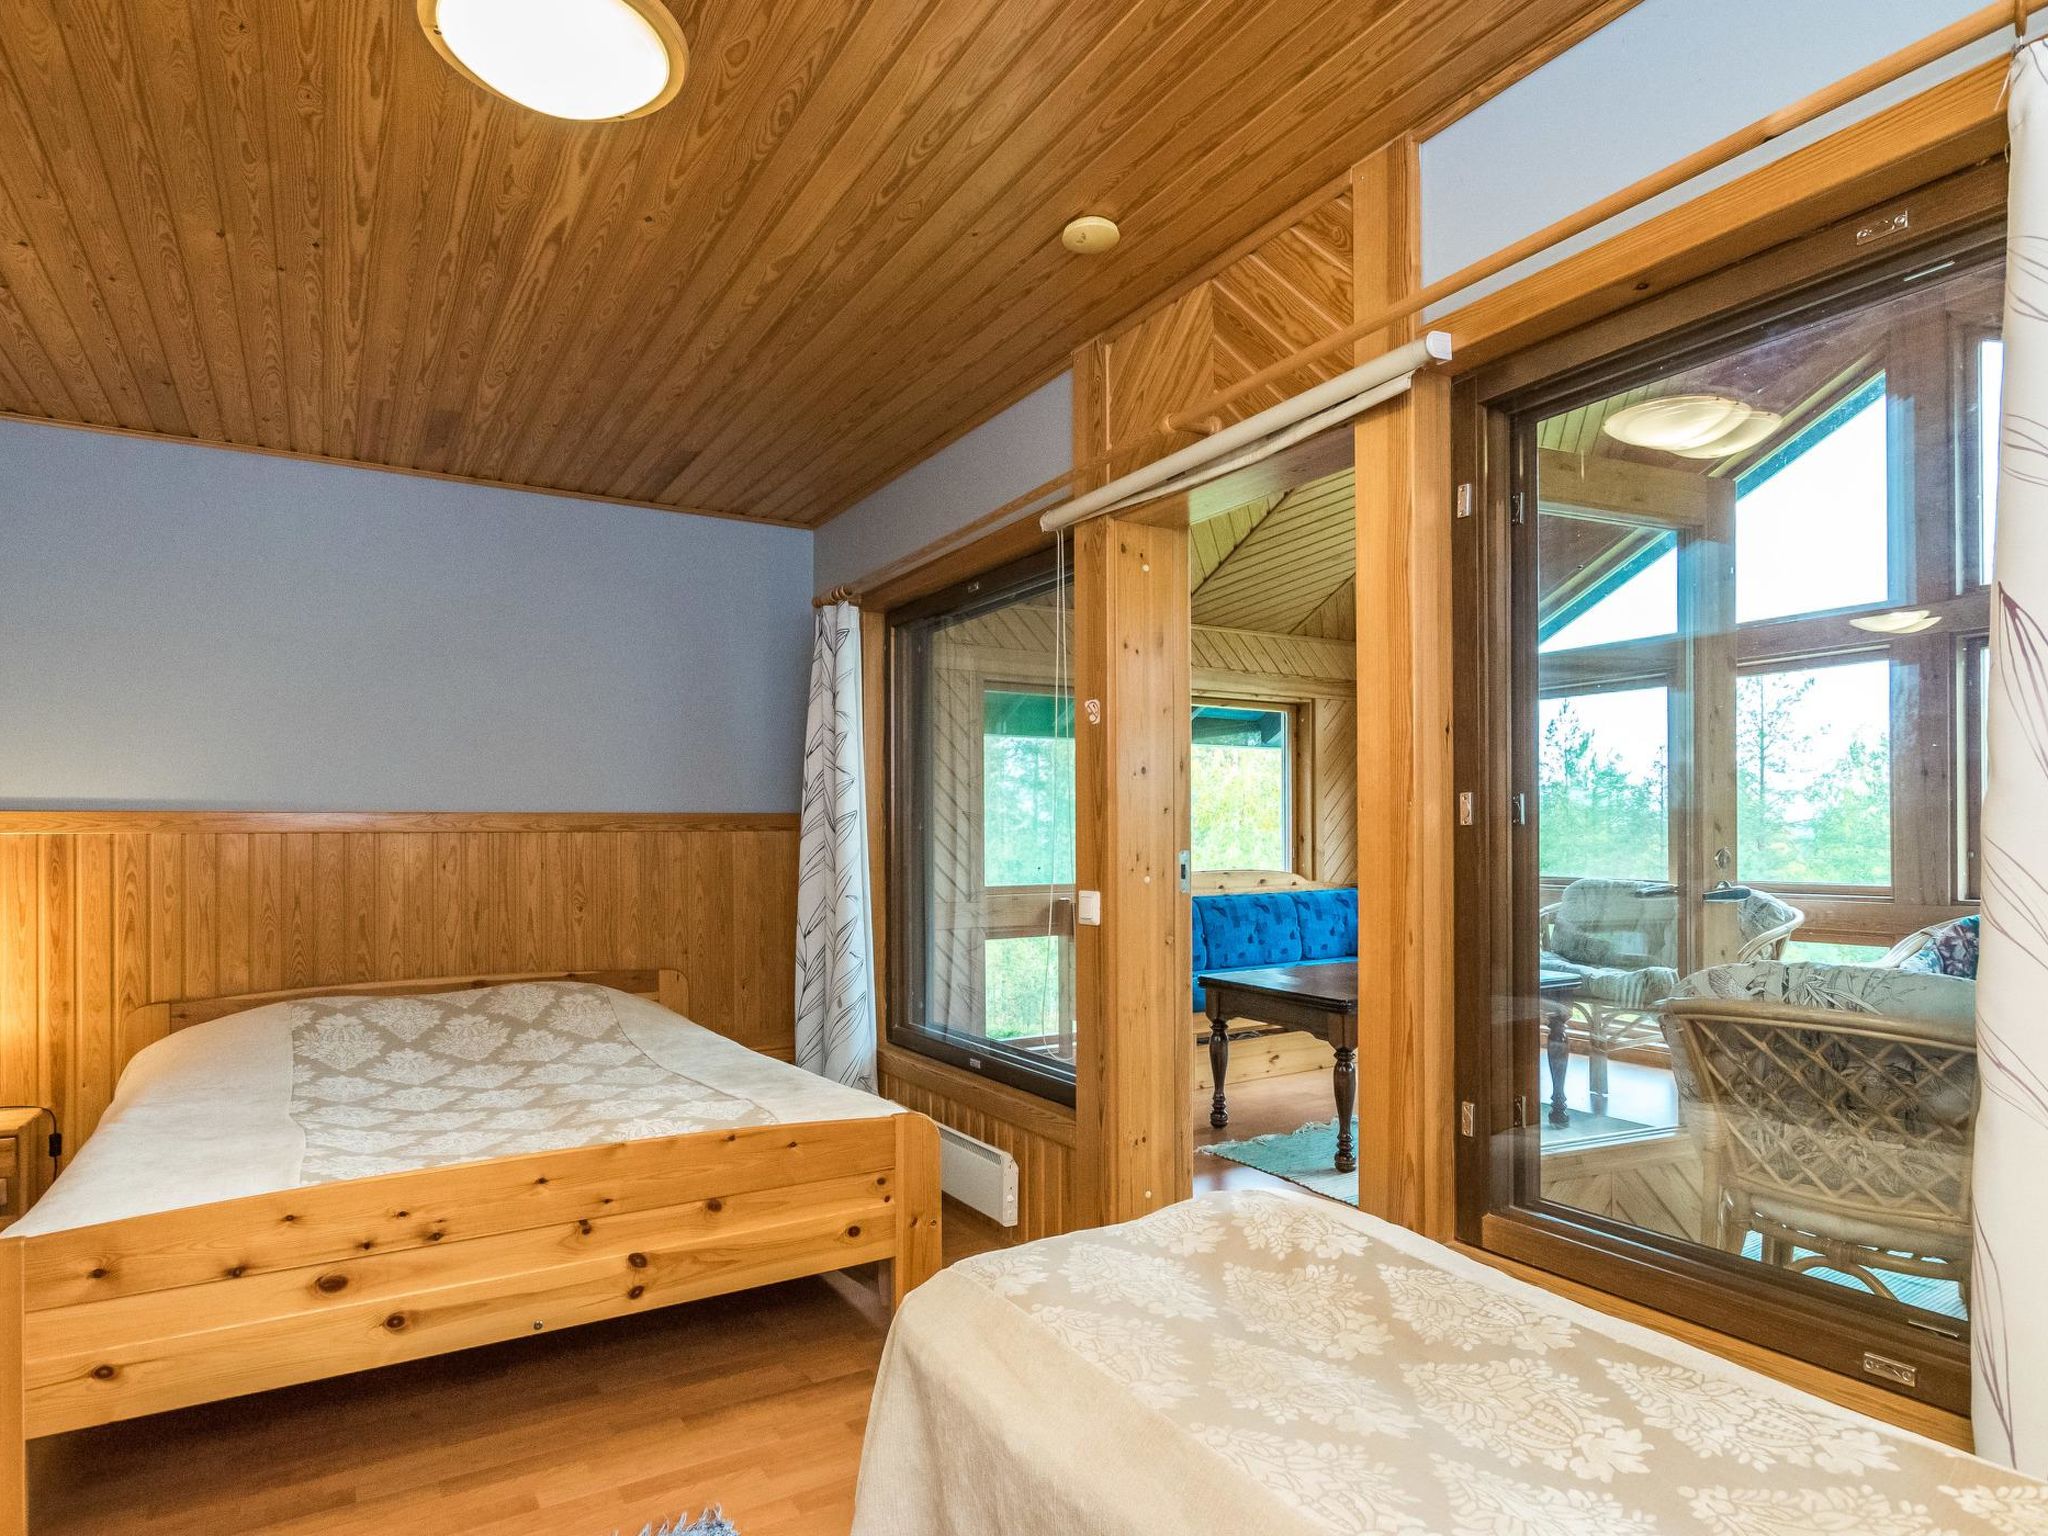 Photo 19 - 6 bedroom House in Mikkeli with sauna